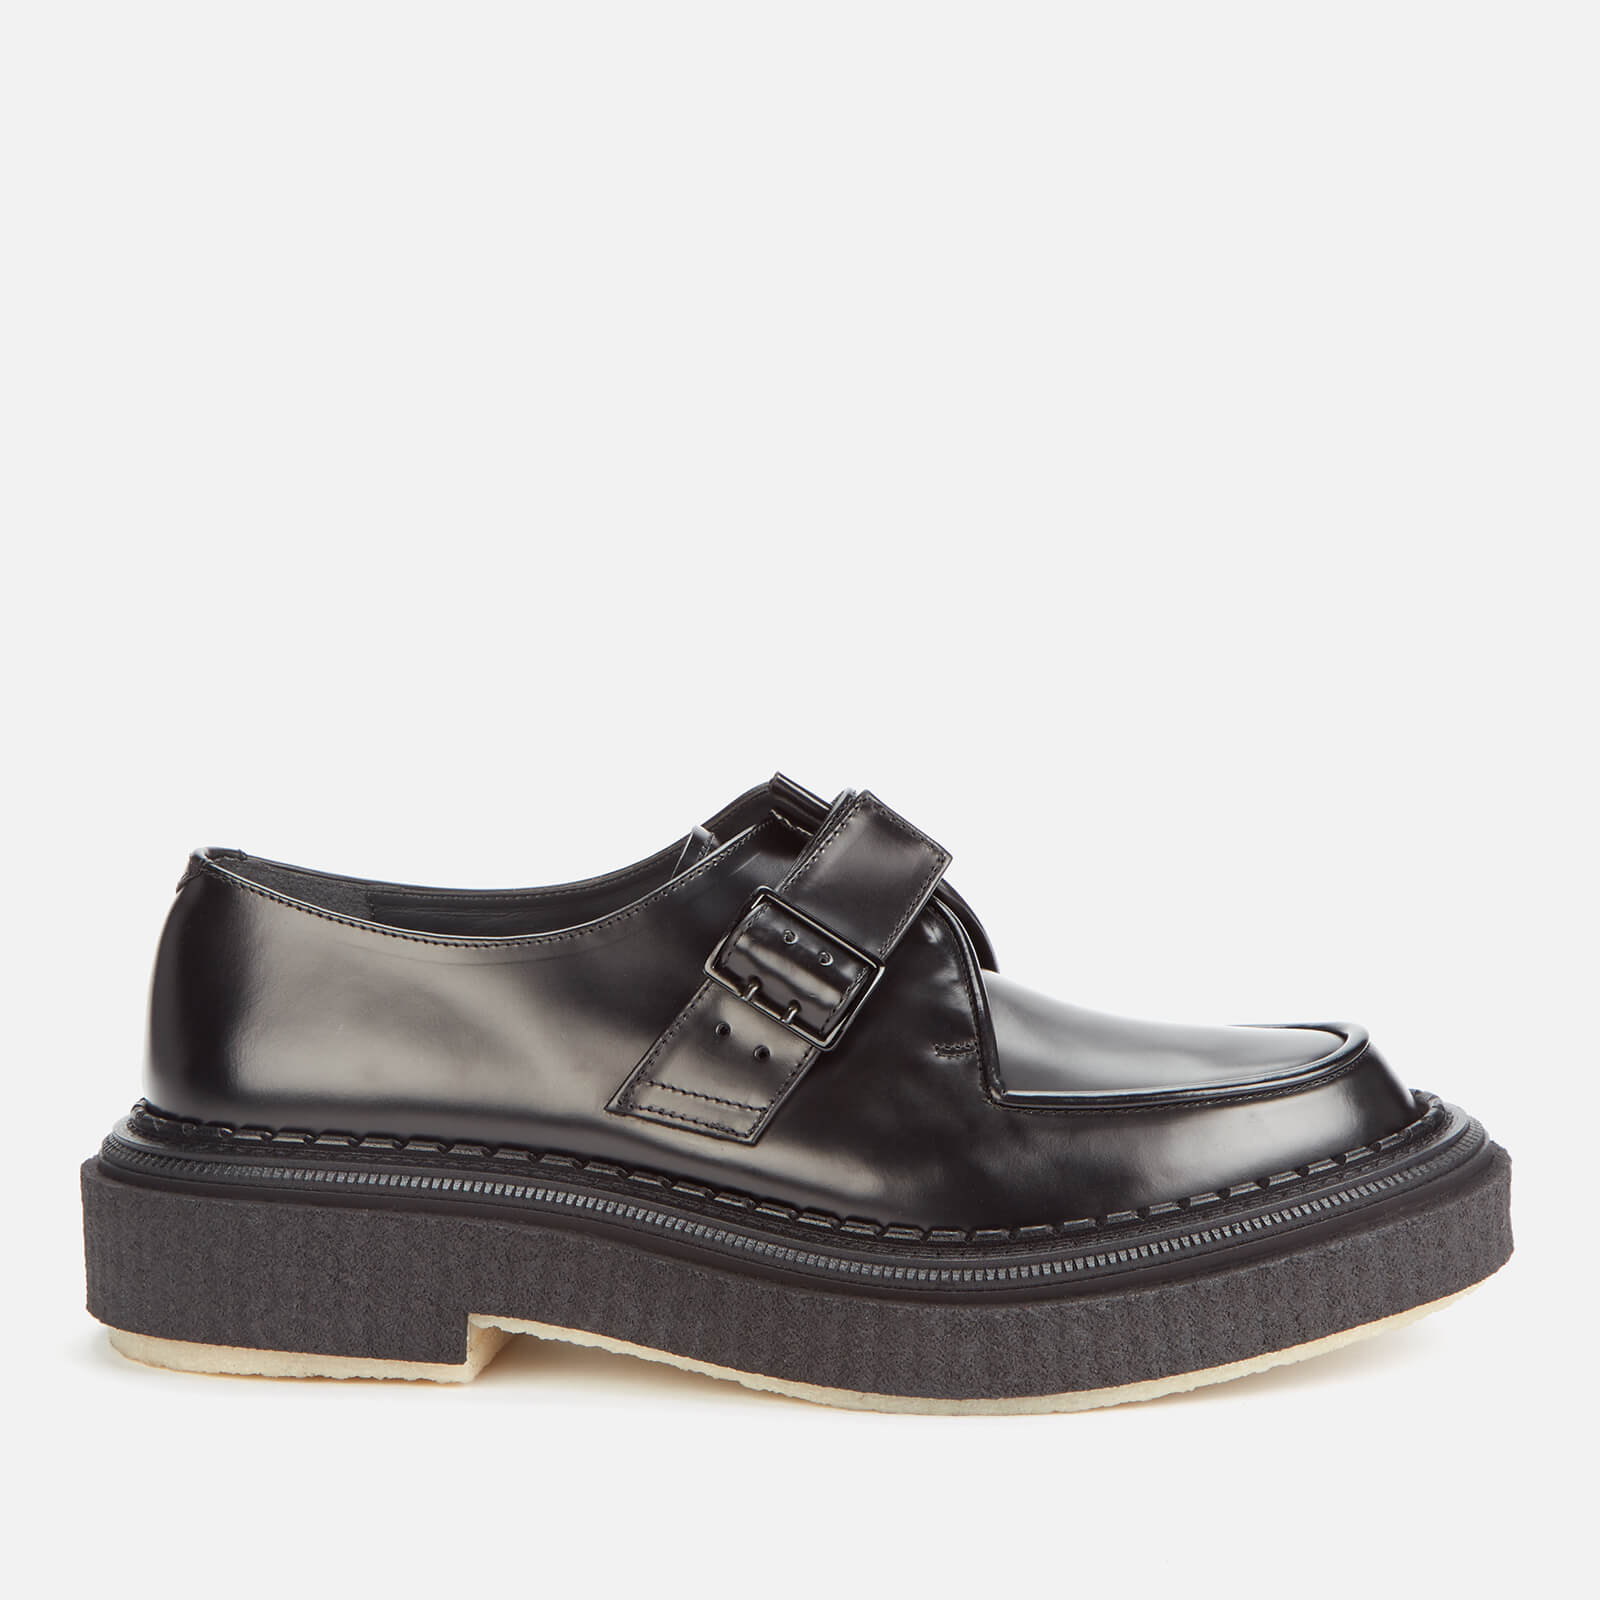 Adieu Men's Type 136 Leather Crepe Sole Single Strap Monk Shoes - Black - UK 10